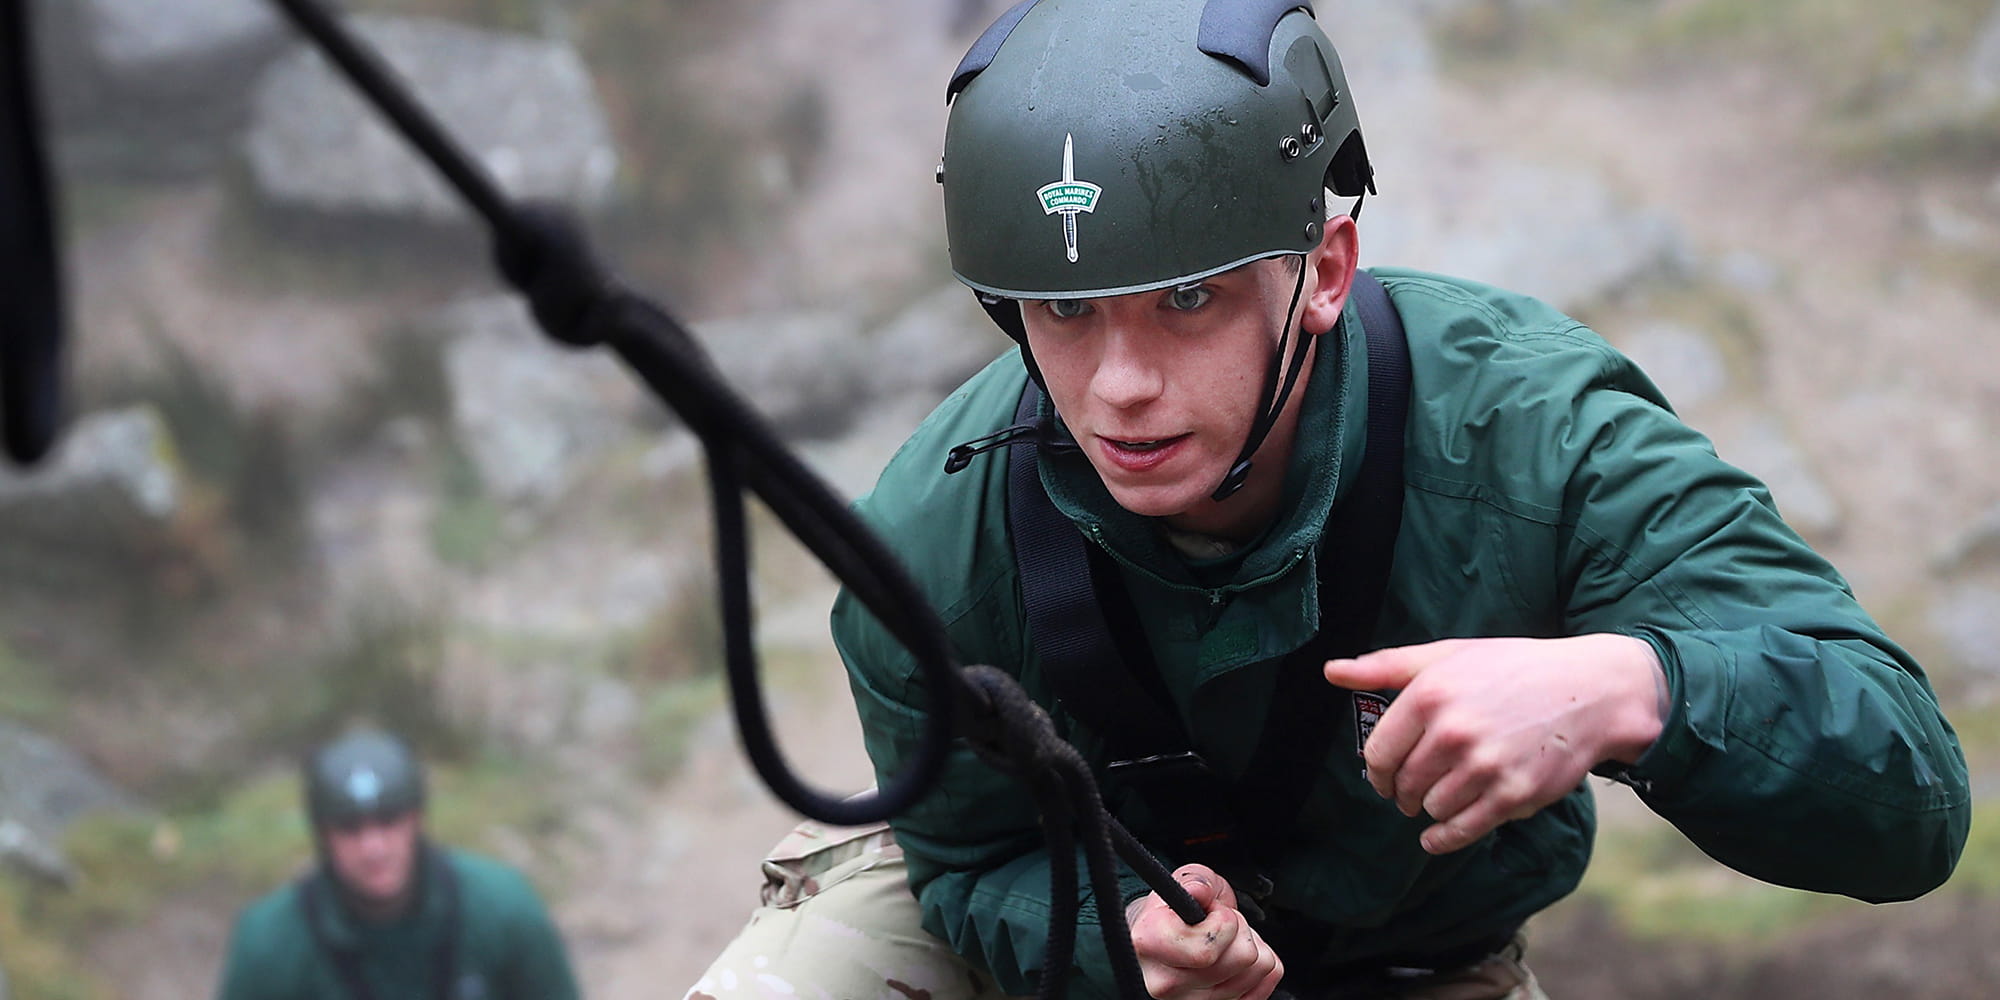 Royal Marine carrying out climbing training wearing green helmet